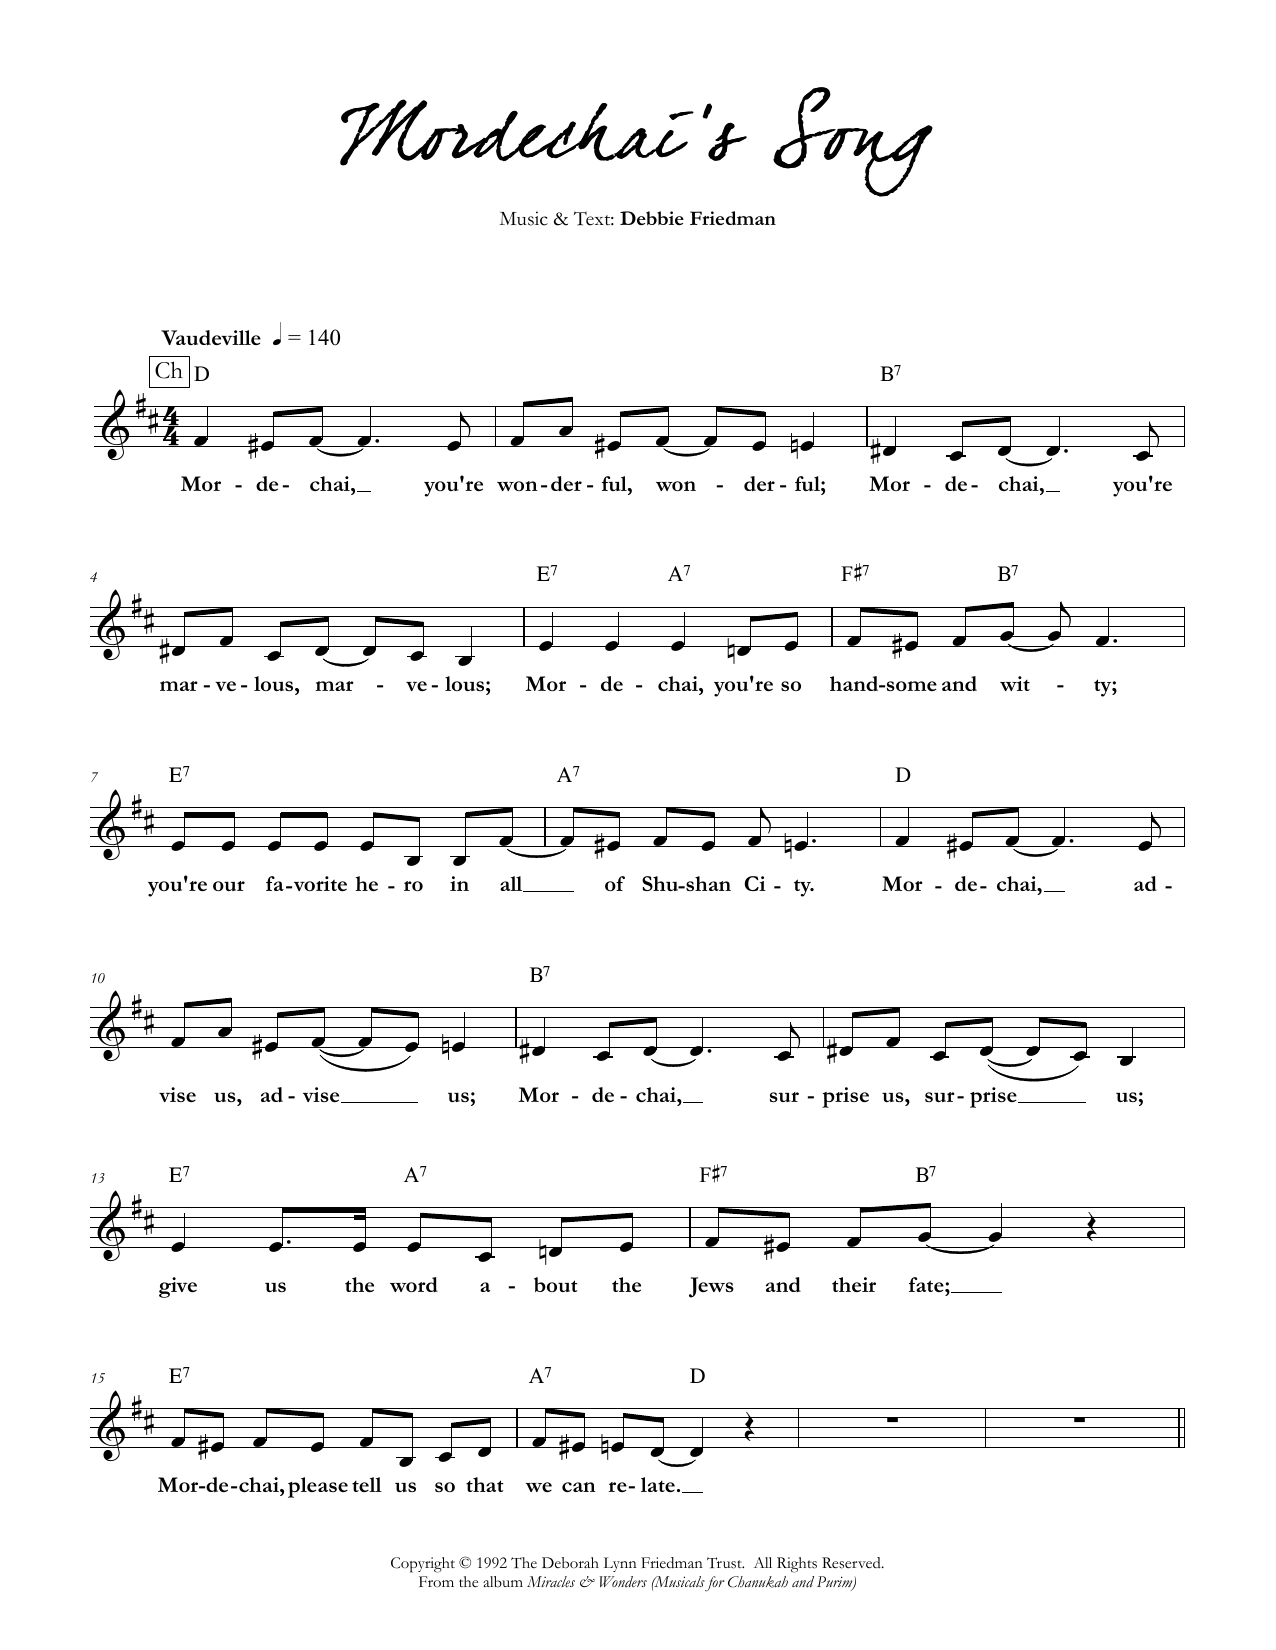 Debbie Friedman Mordechai's Song Sheet Music Notes & Chords for Lead Sheet / Fake Book - Download or Print PDF